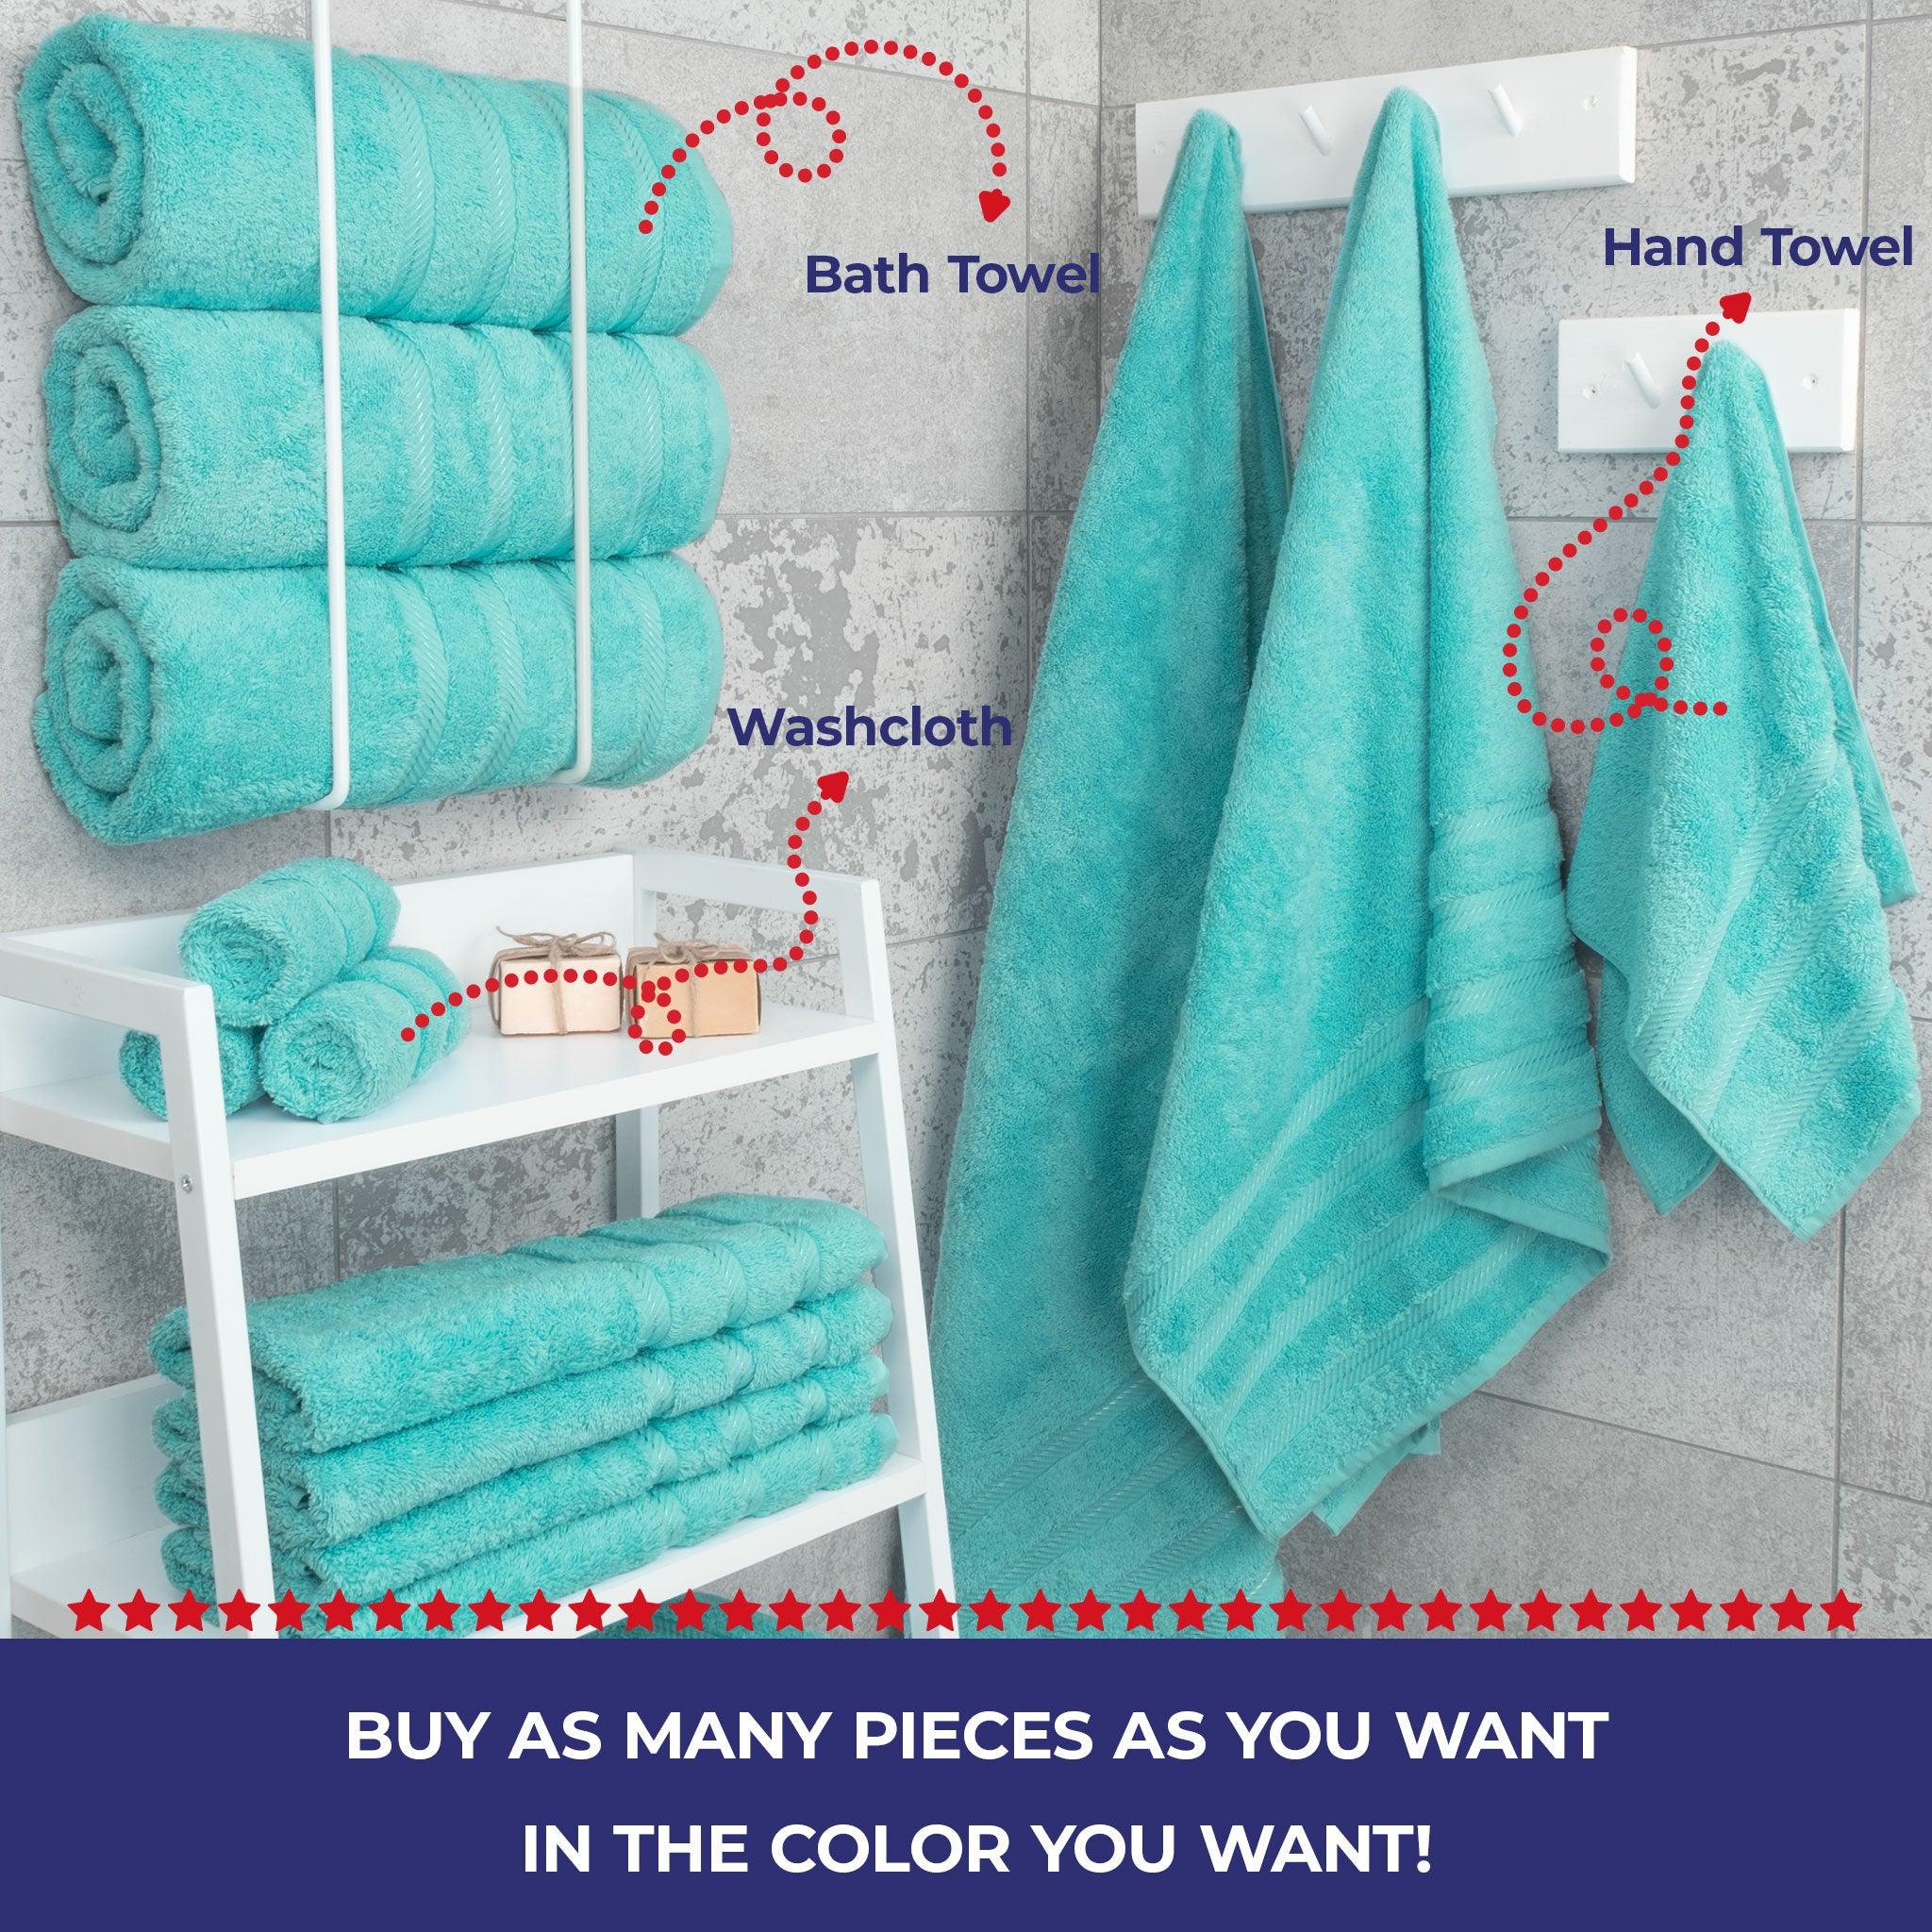 American Soft Linen - Single Piece Turkish Cotton Bath Towels - Turquoise-Blue - 4